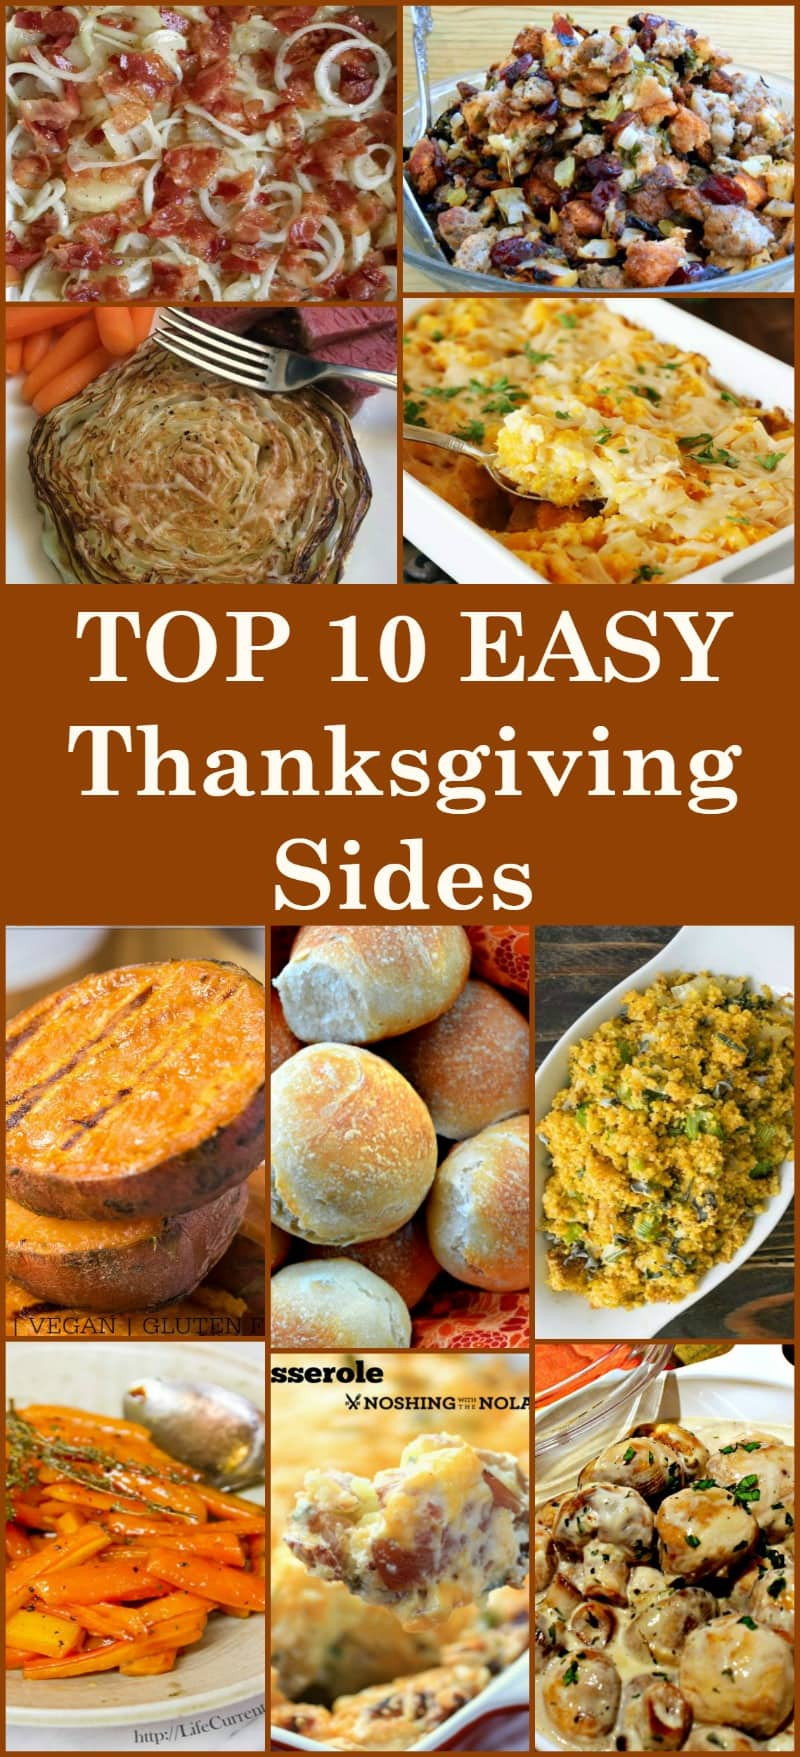 Make Ahead Sides For Thanksgiving
 Best 30 Make Ahead Sides for Thanksgiving Most Popular